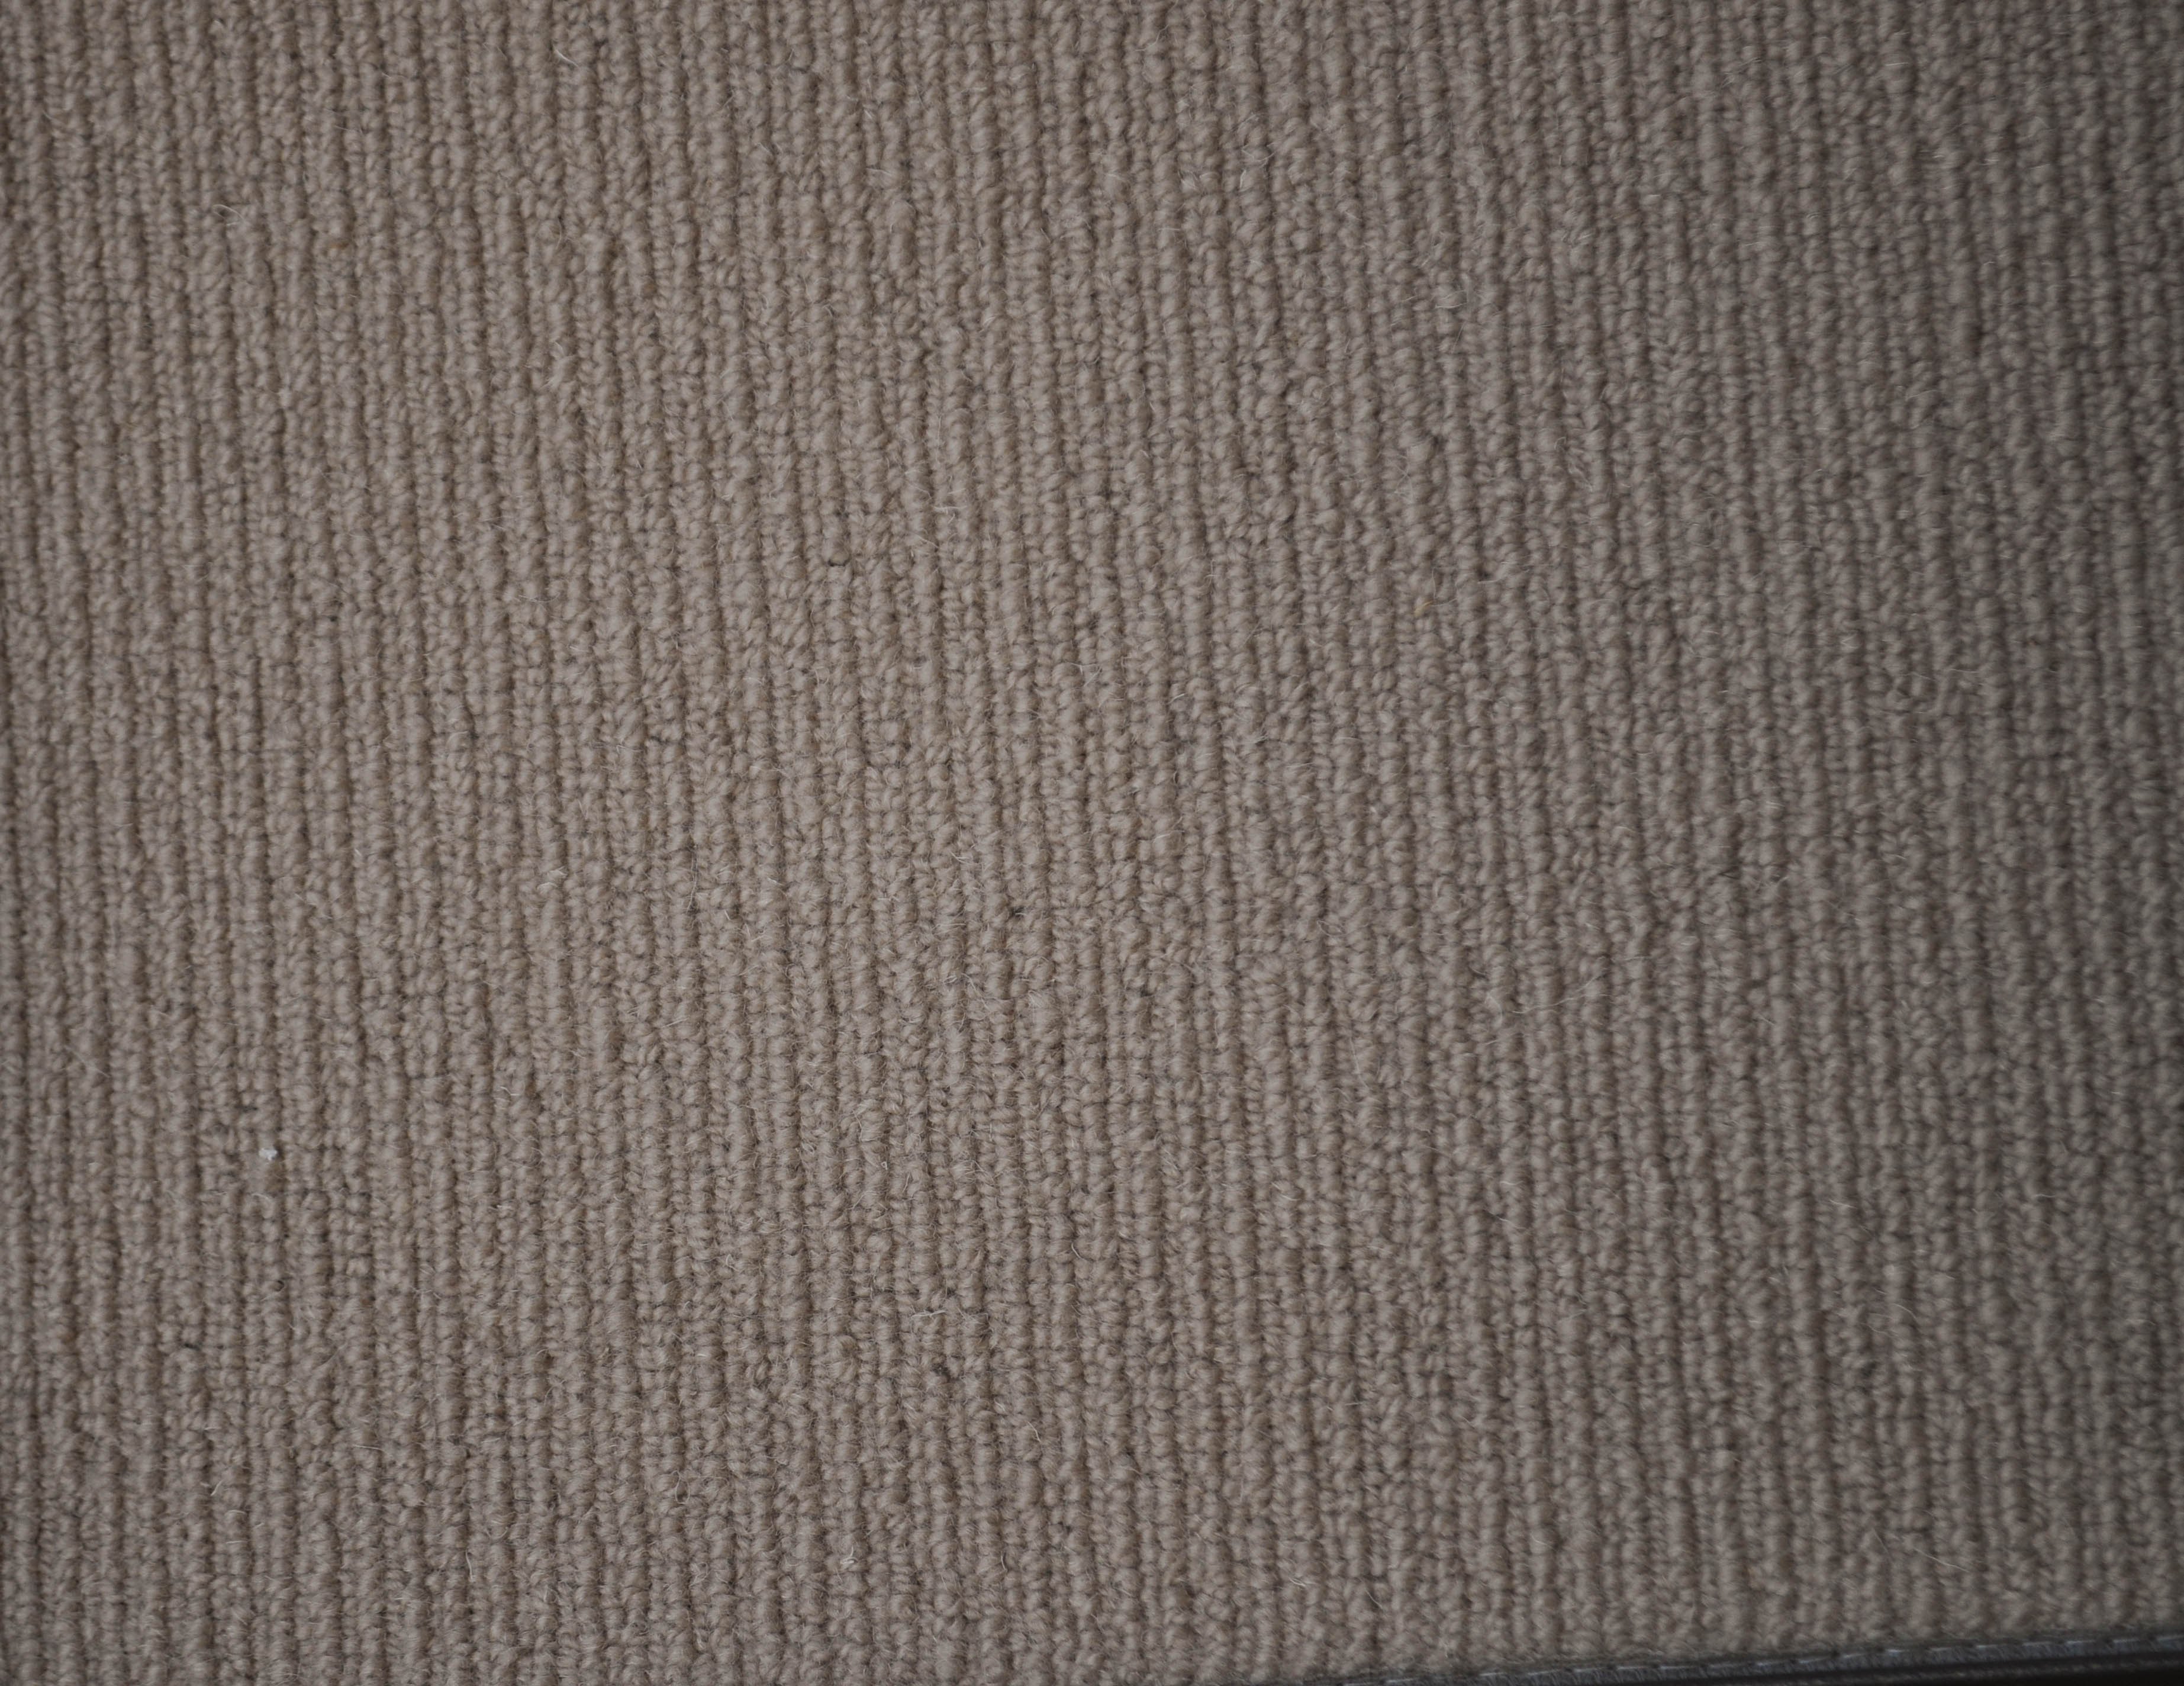 showing a sample of carpet, it being of an brown color, sisal tram trek yarn carpet on sale at Concord Floors.